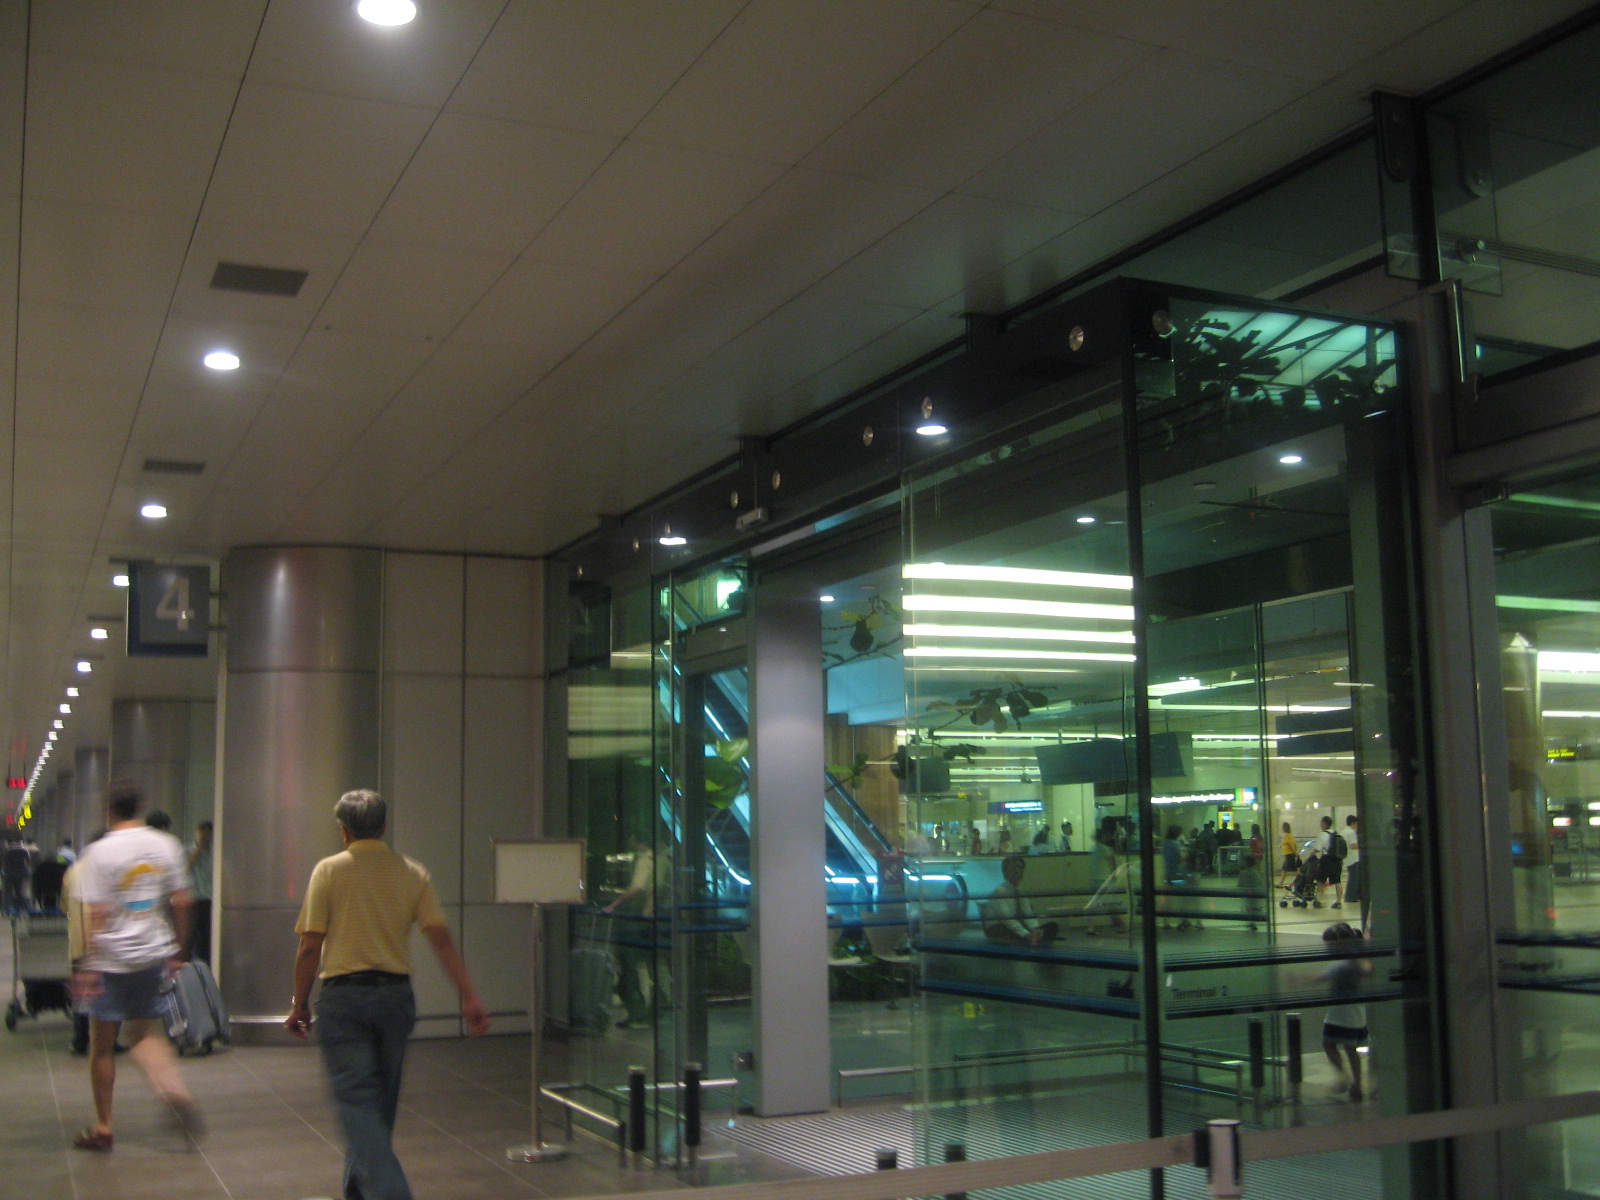 Changi Airport Terminal 3 Arrival